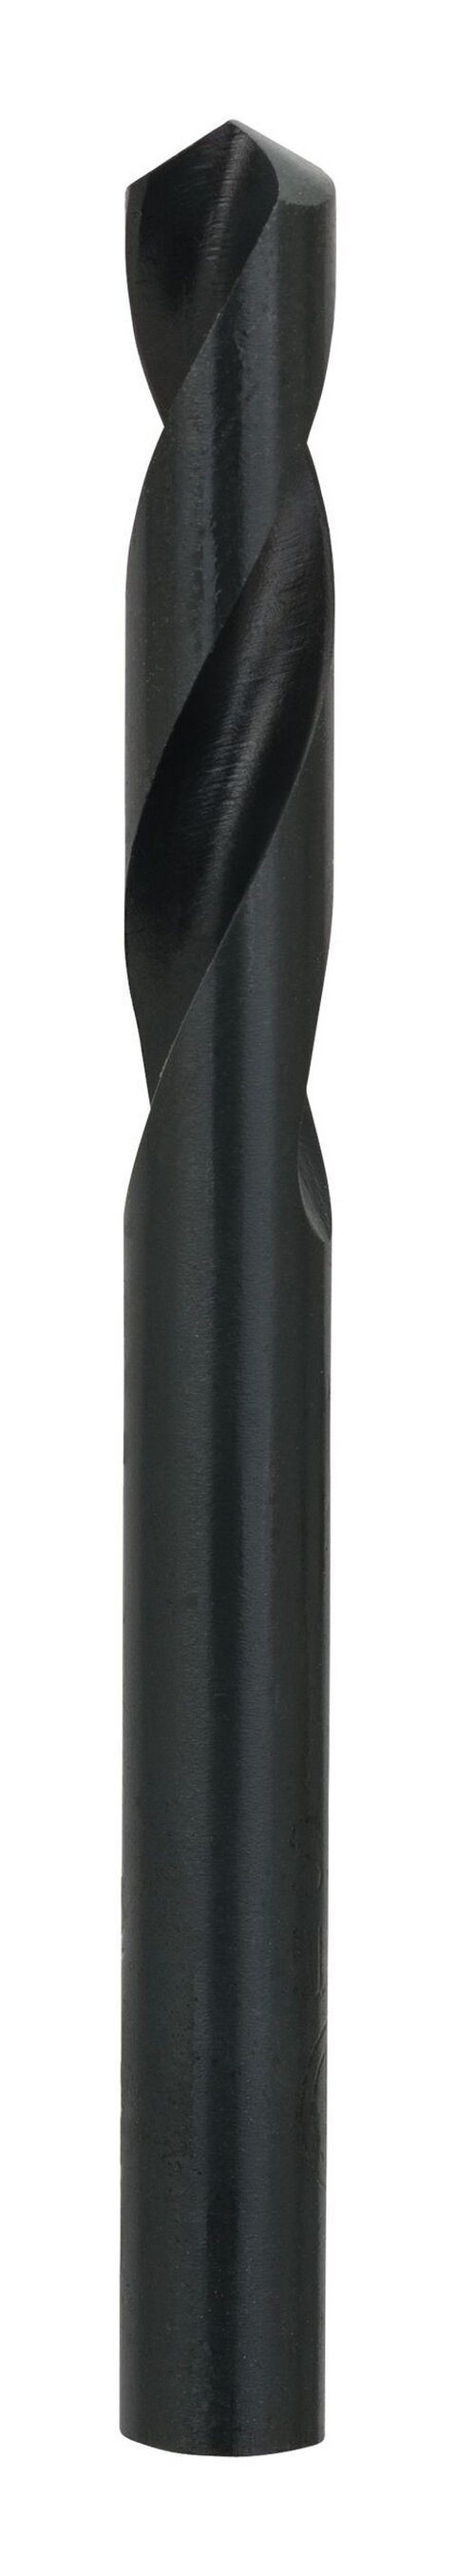 BOSCH Metallbohrer, x 66 1897) 6 mm Karosseriebohrer (10 10er-Pack x (DIN - - 28 Stück), HSS-R